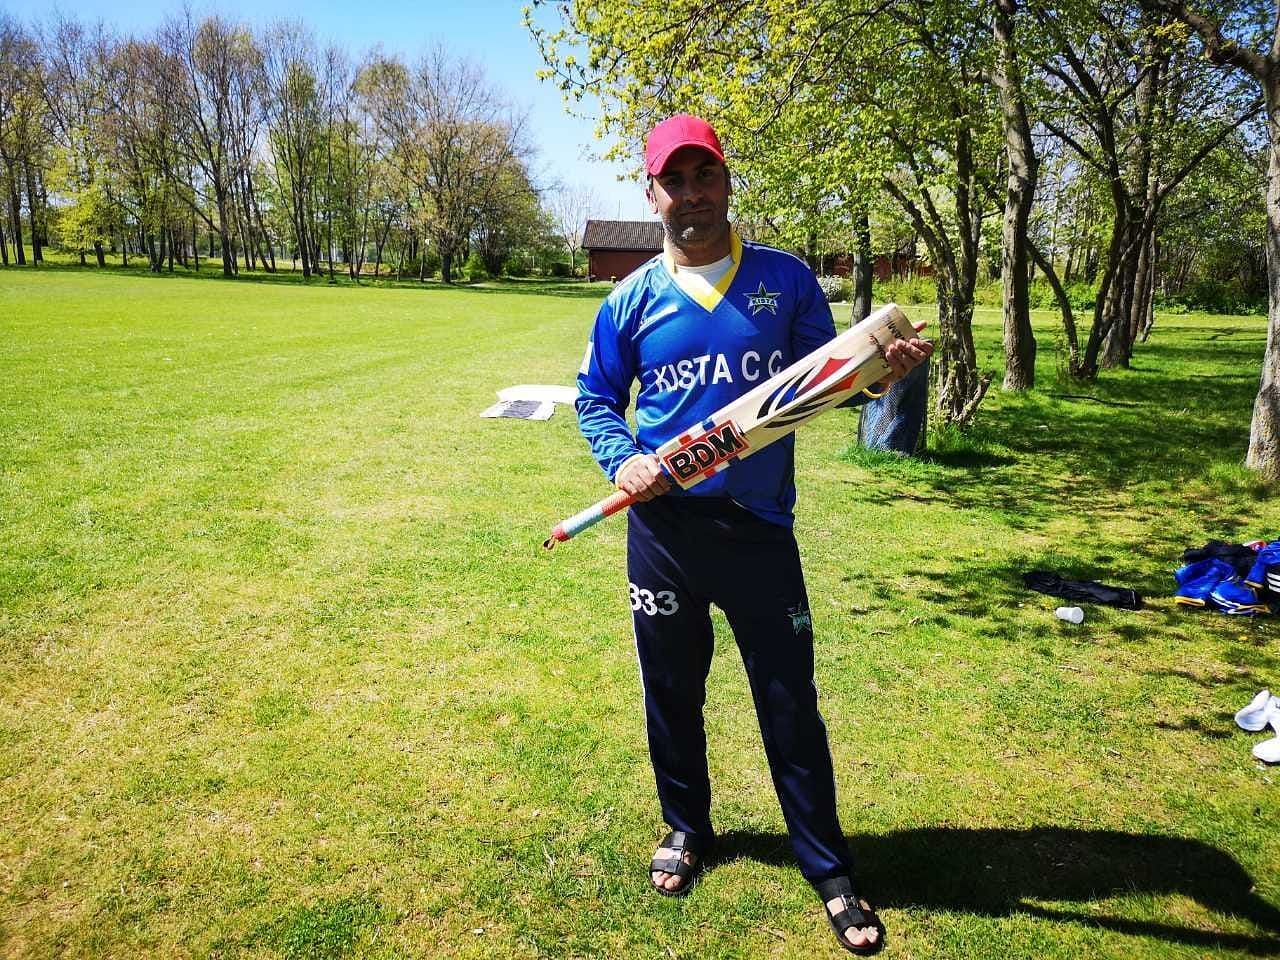 Marsta cricketer Waqas Haider poses for a photo